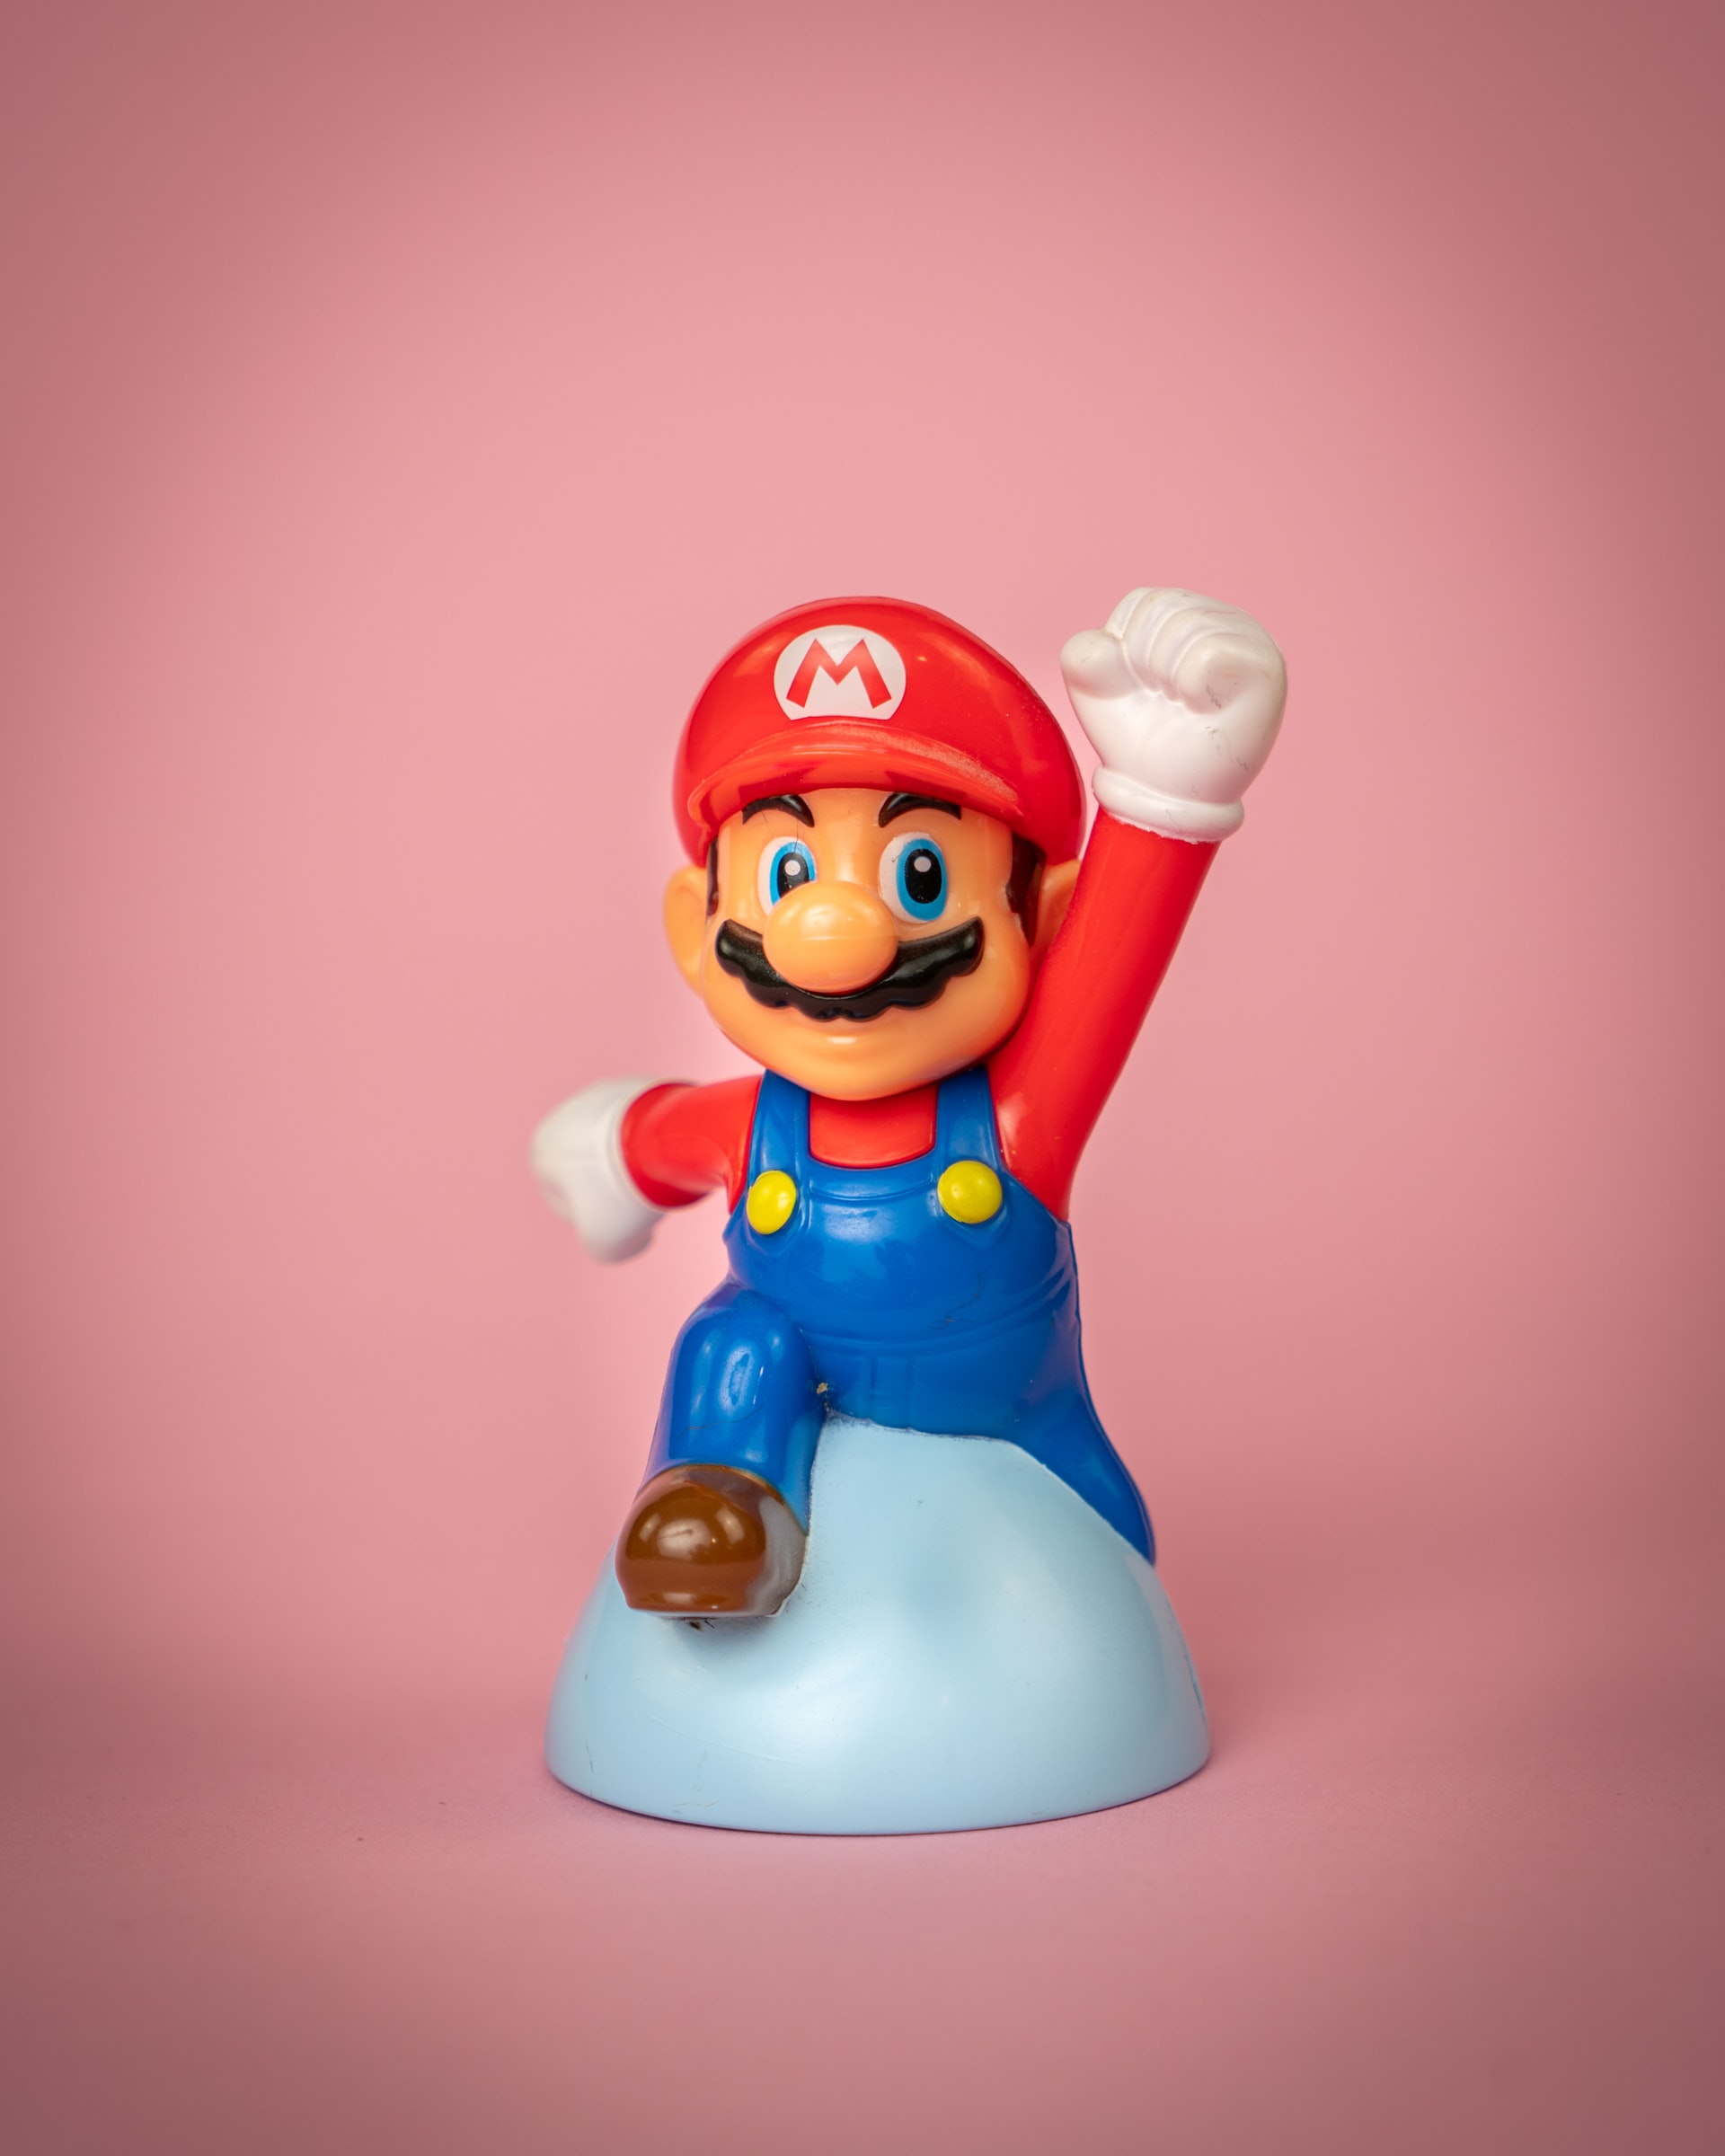 You are currently viewing De 5 bedste øjeblikke i Marios historie